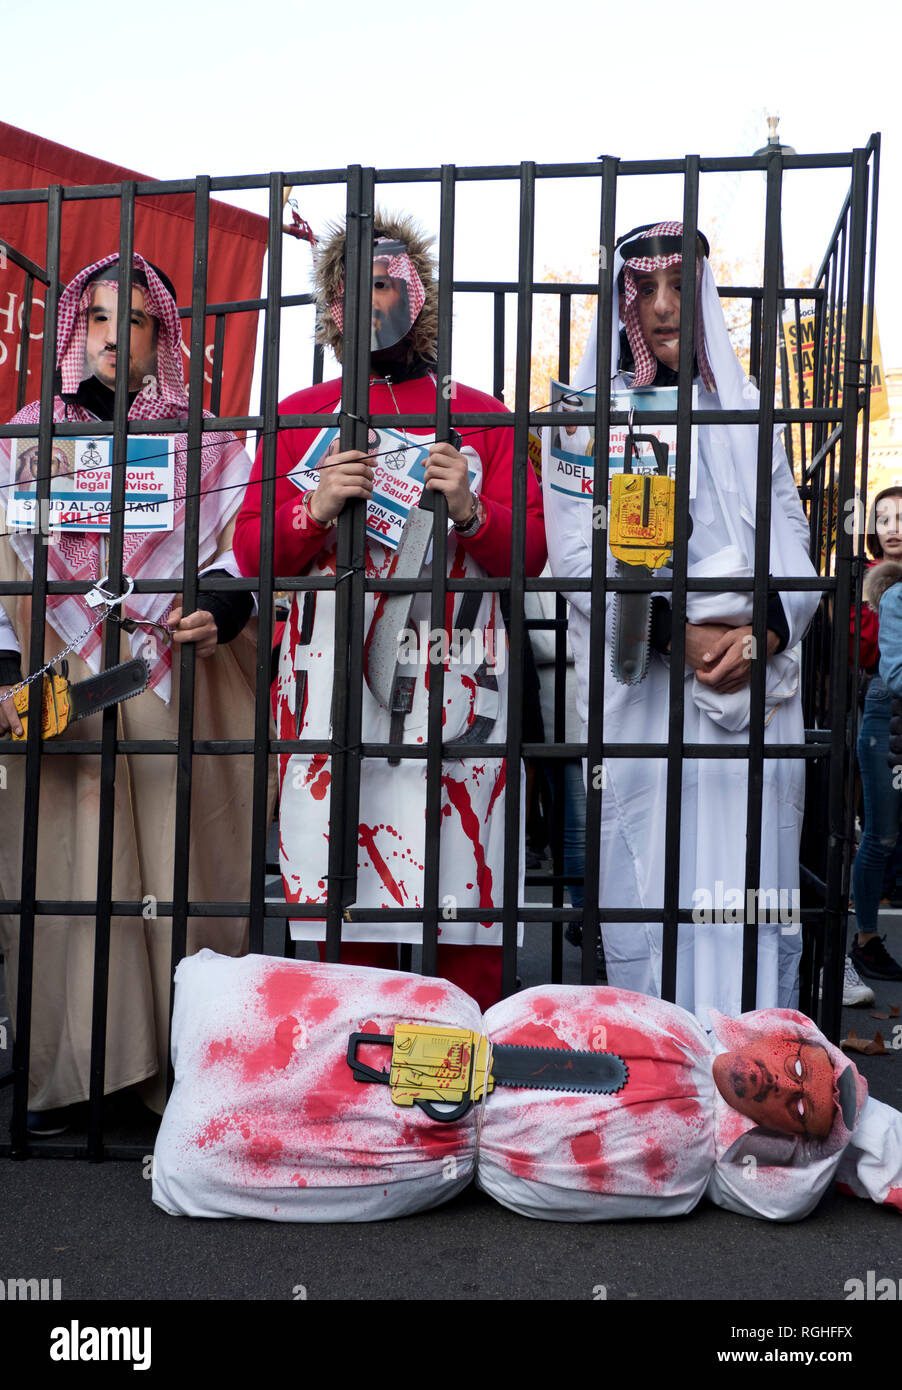 Following killing US Saudi journalist Jamal Khashoggi in Turkey, demonstrators came dressed as Saudi officials, including Saudi Crown Prince Mohammad bin Salman, inside a fake prison cell . Stock Photo